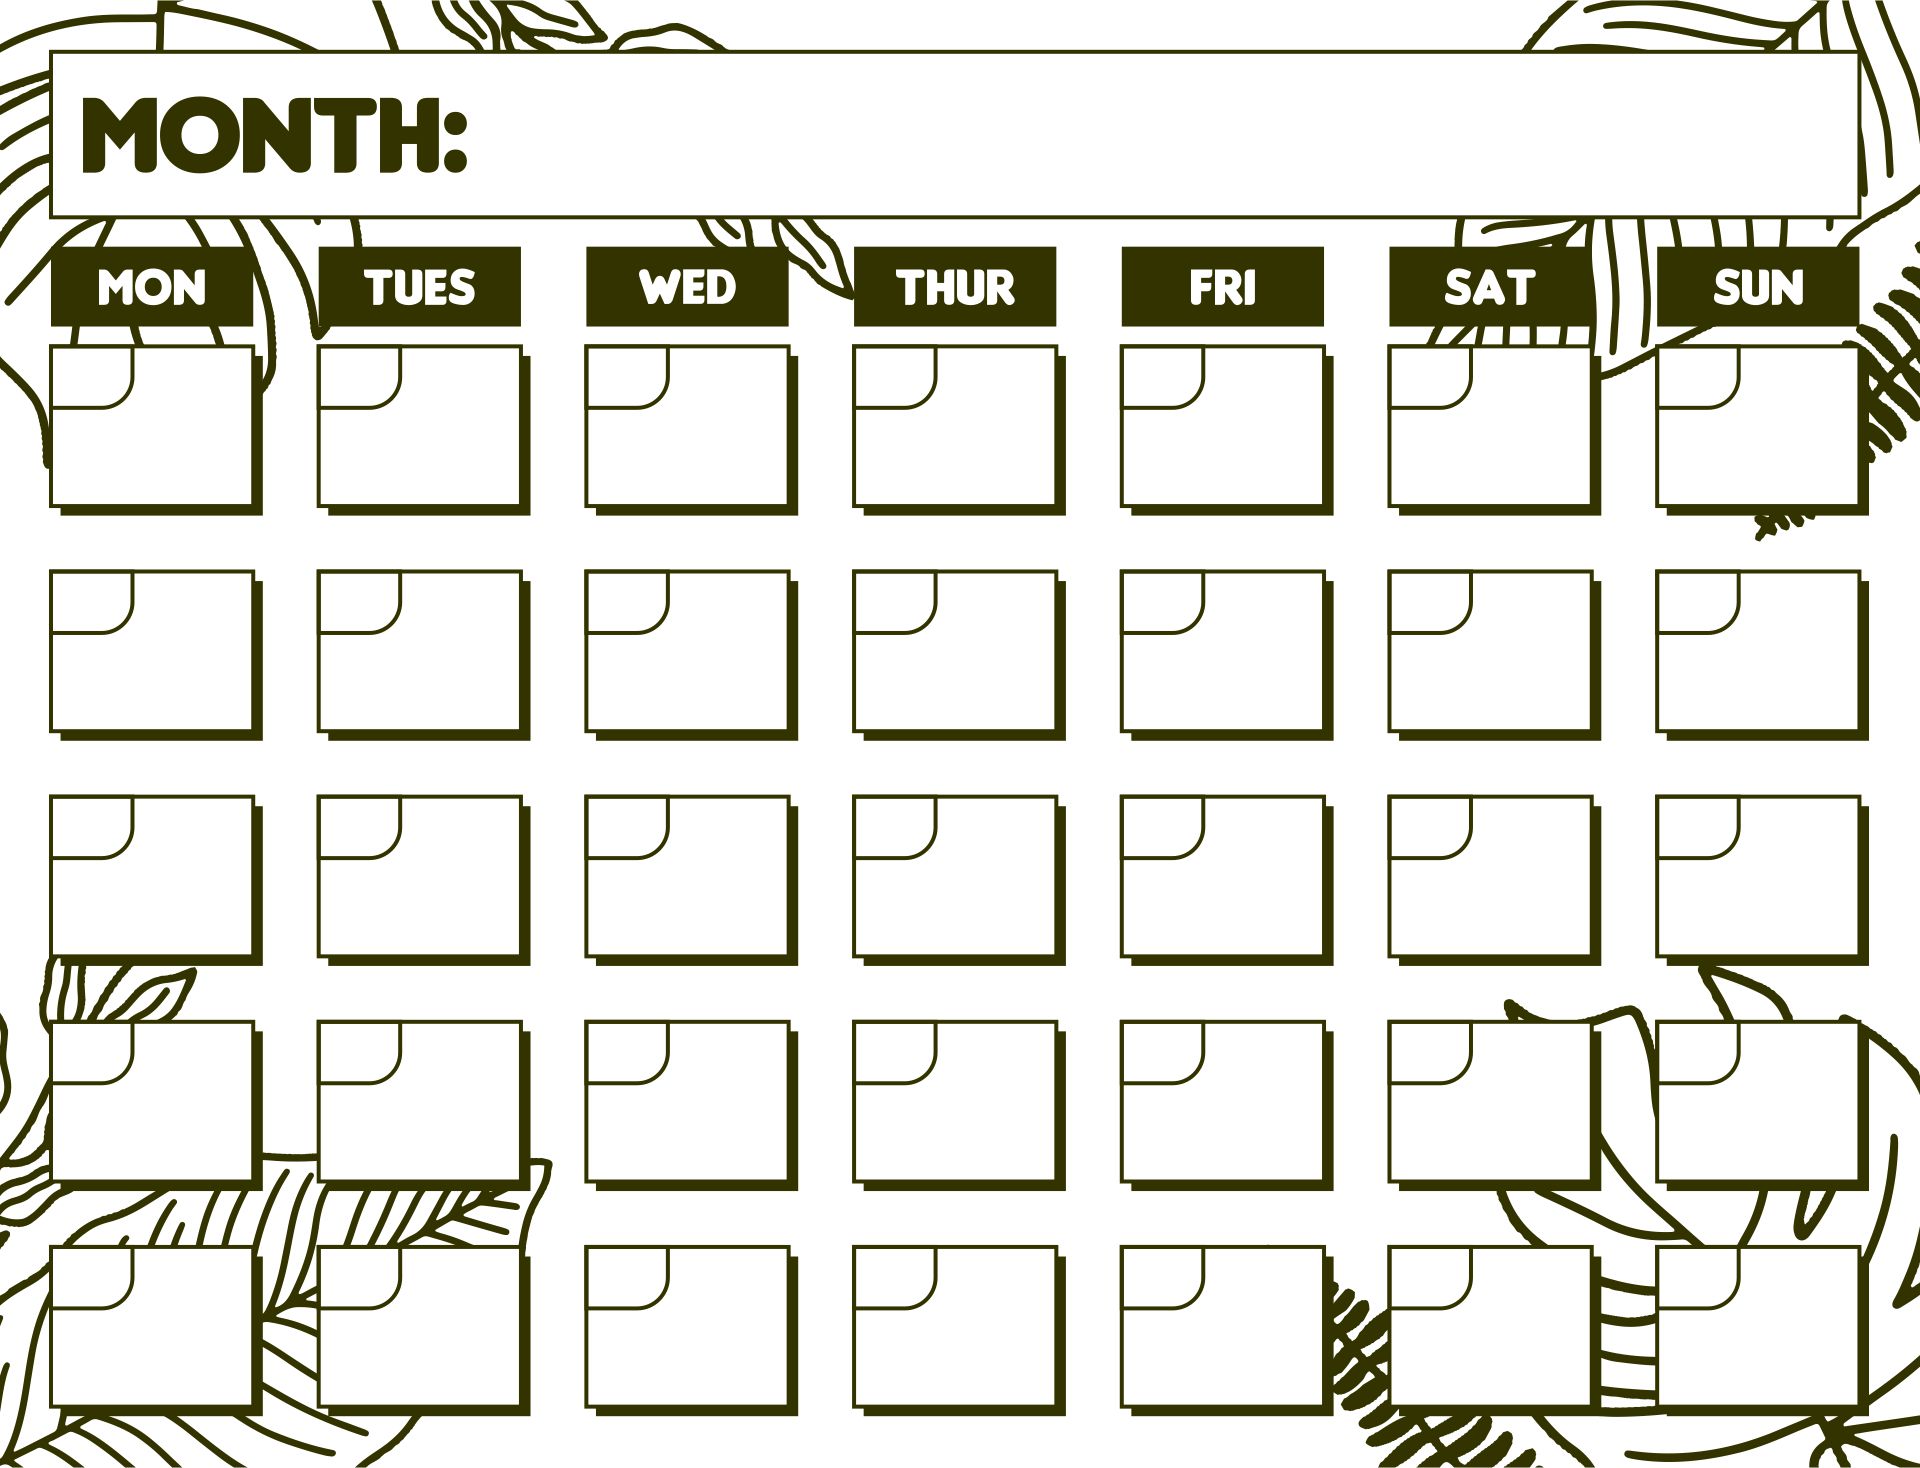  Printable Monthly Calendar